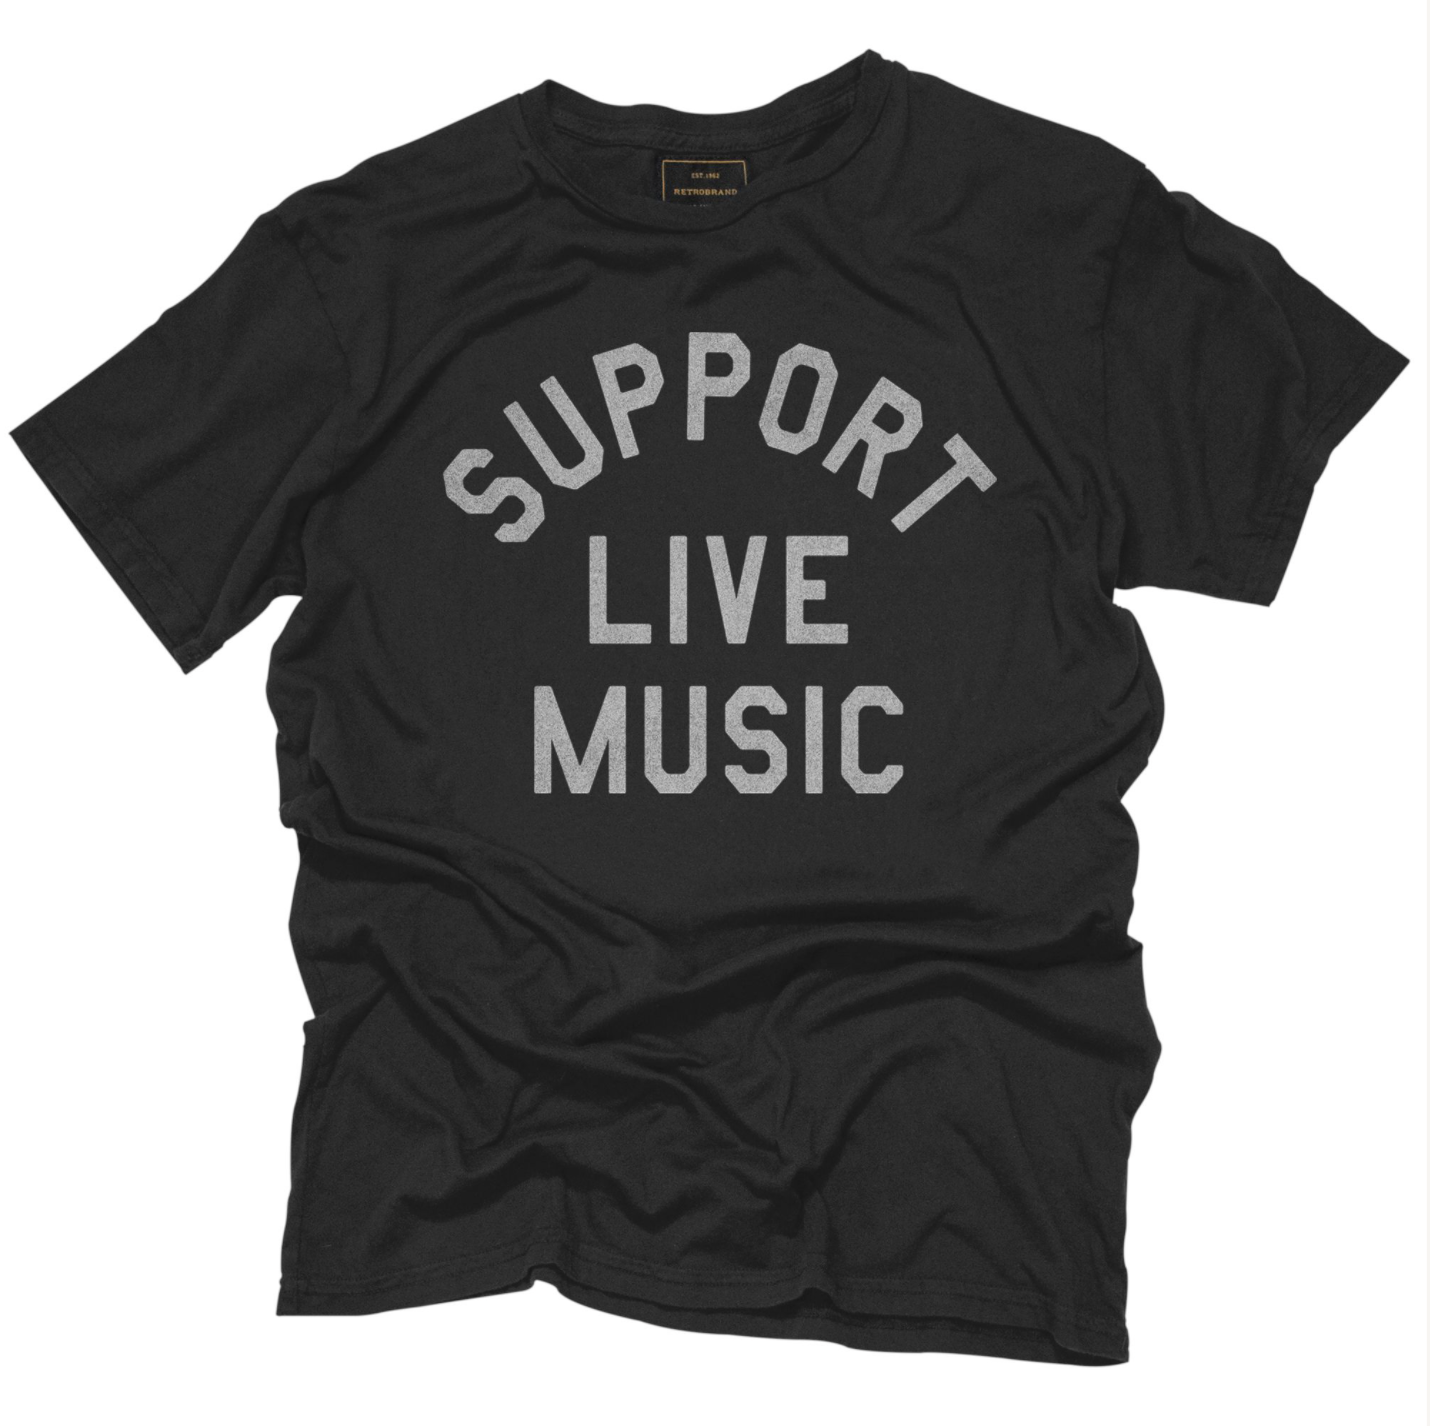 Retro Brand Black Label - Support Live Music Tee